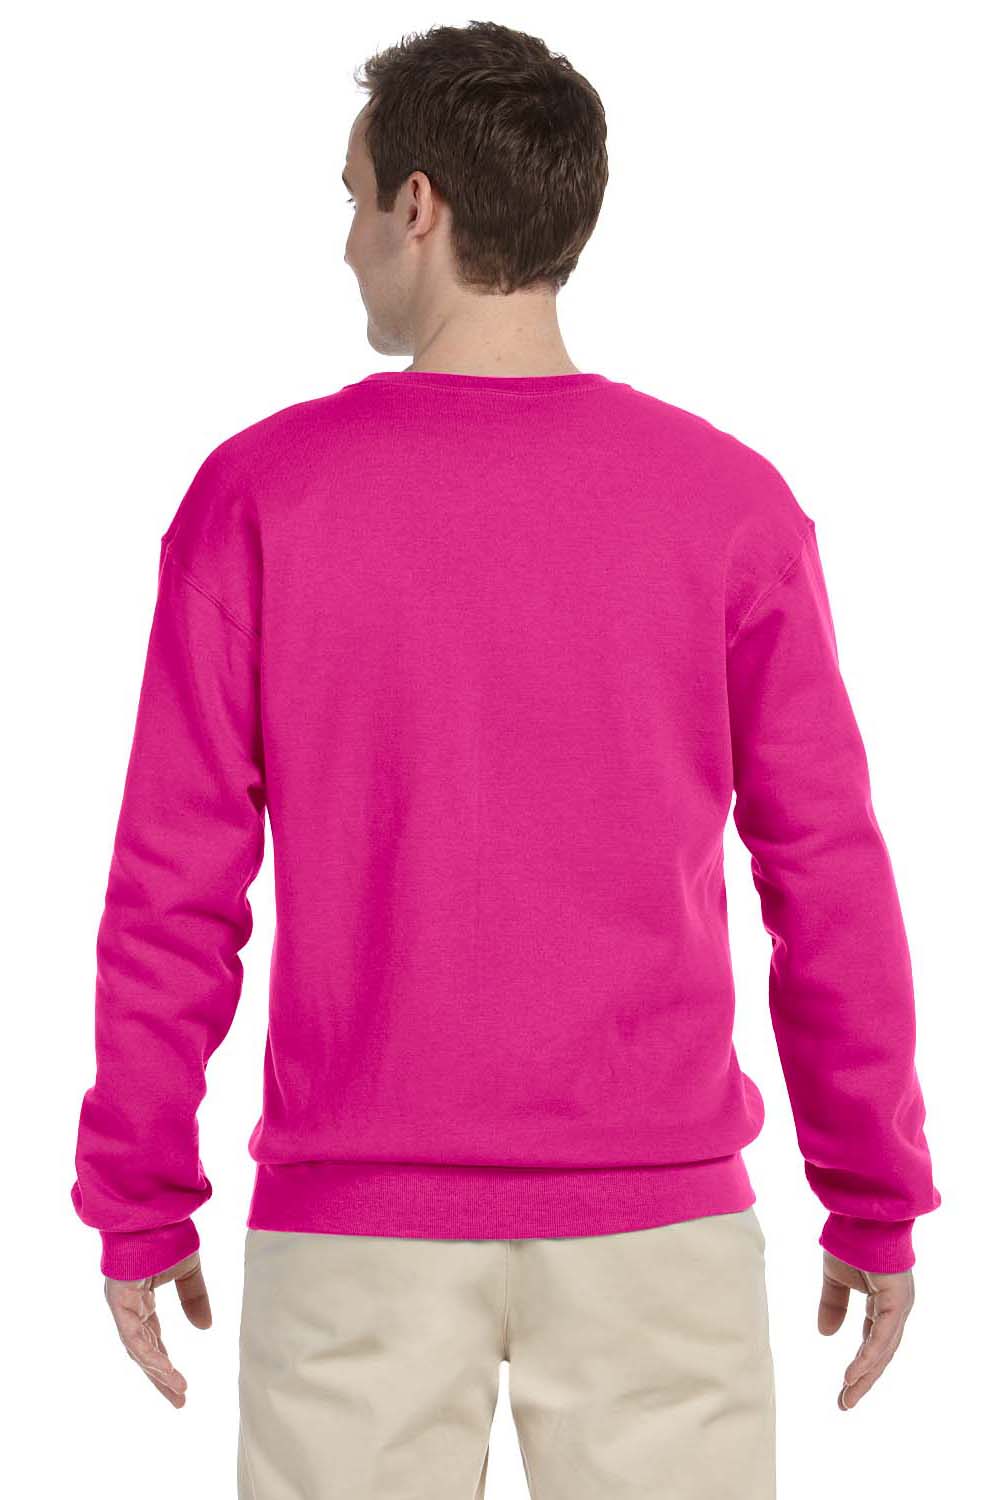 Jerzees 562 Mens NuBlend Fleece Crewneck Sweatshirt Cyber Pink Back